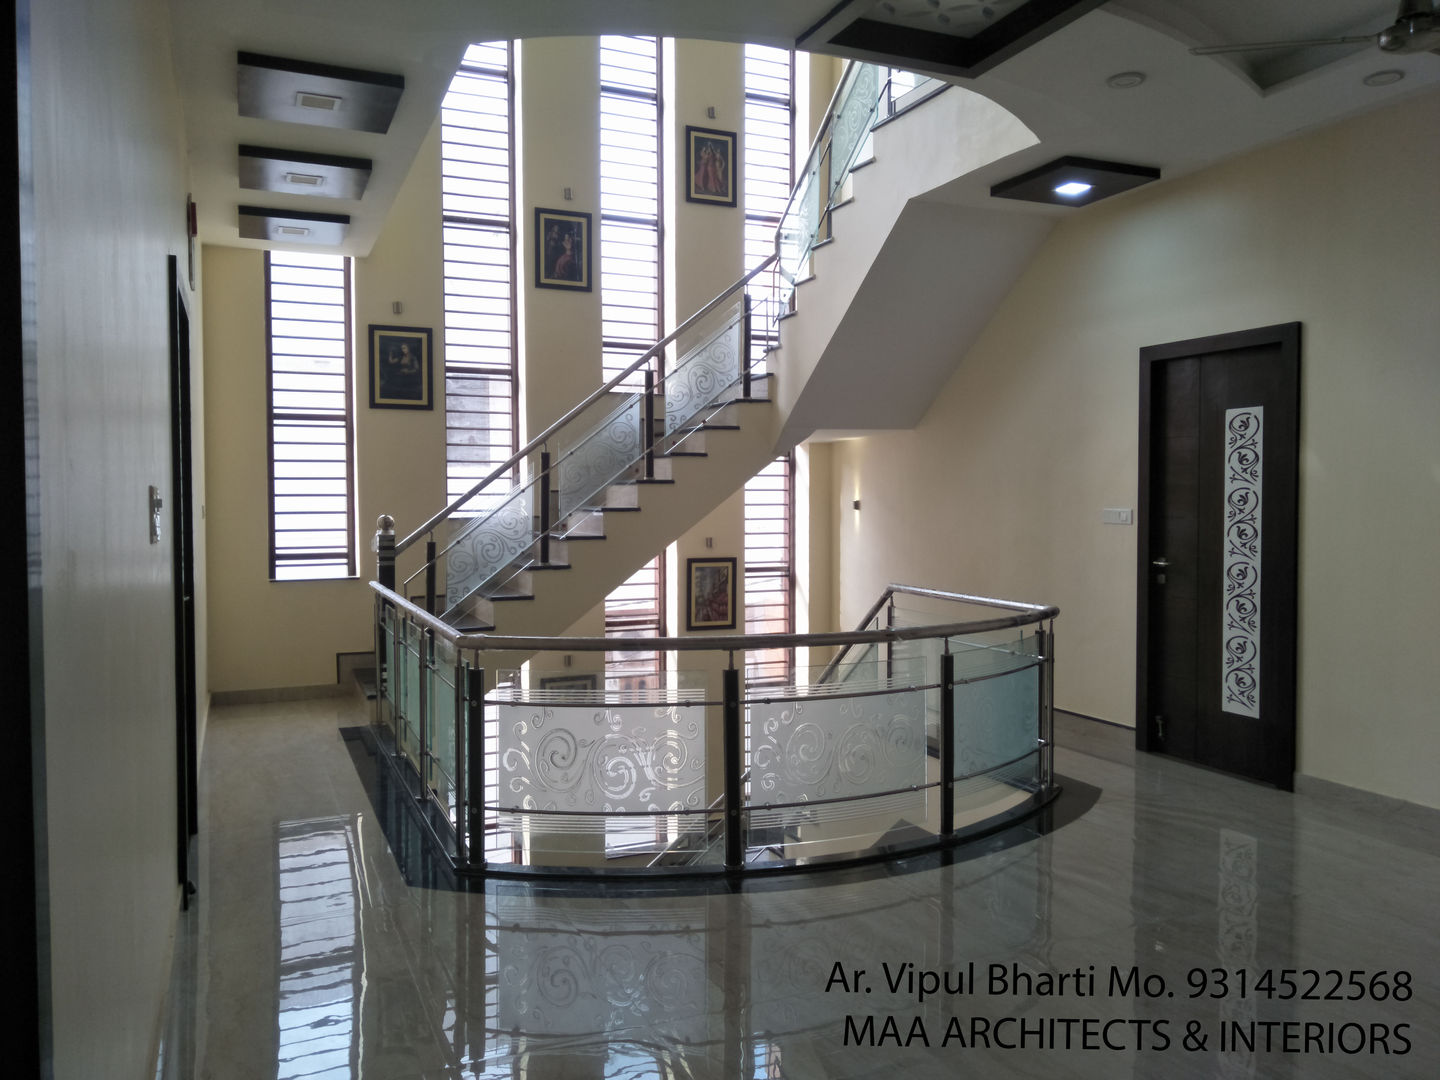 Sunil ji Kalyani , MAA ARCHITECTS & INTERIOR DESIGNERS MAA ARCHITECTS & INTERIOR DESIGNERS Pasillos, vestíbulos y escaleras de estilo moderno